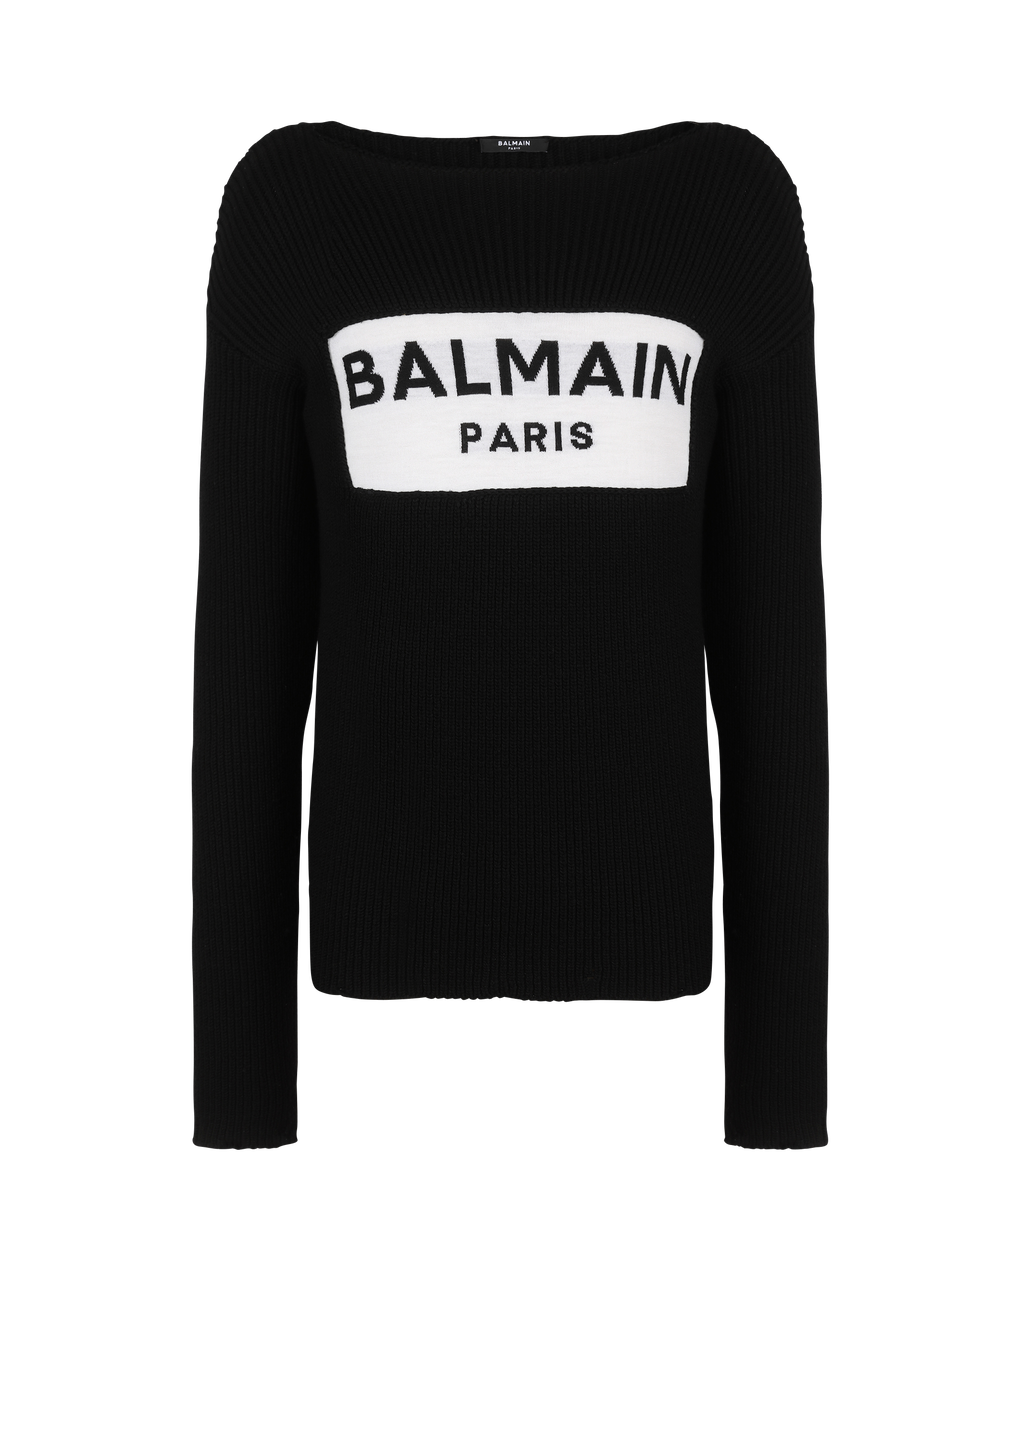 Wool jumper with Balmain Paris logo, black, hi-res